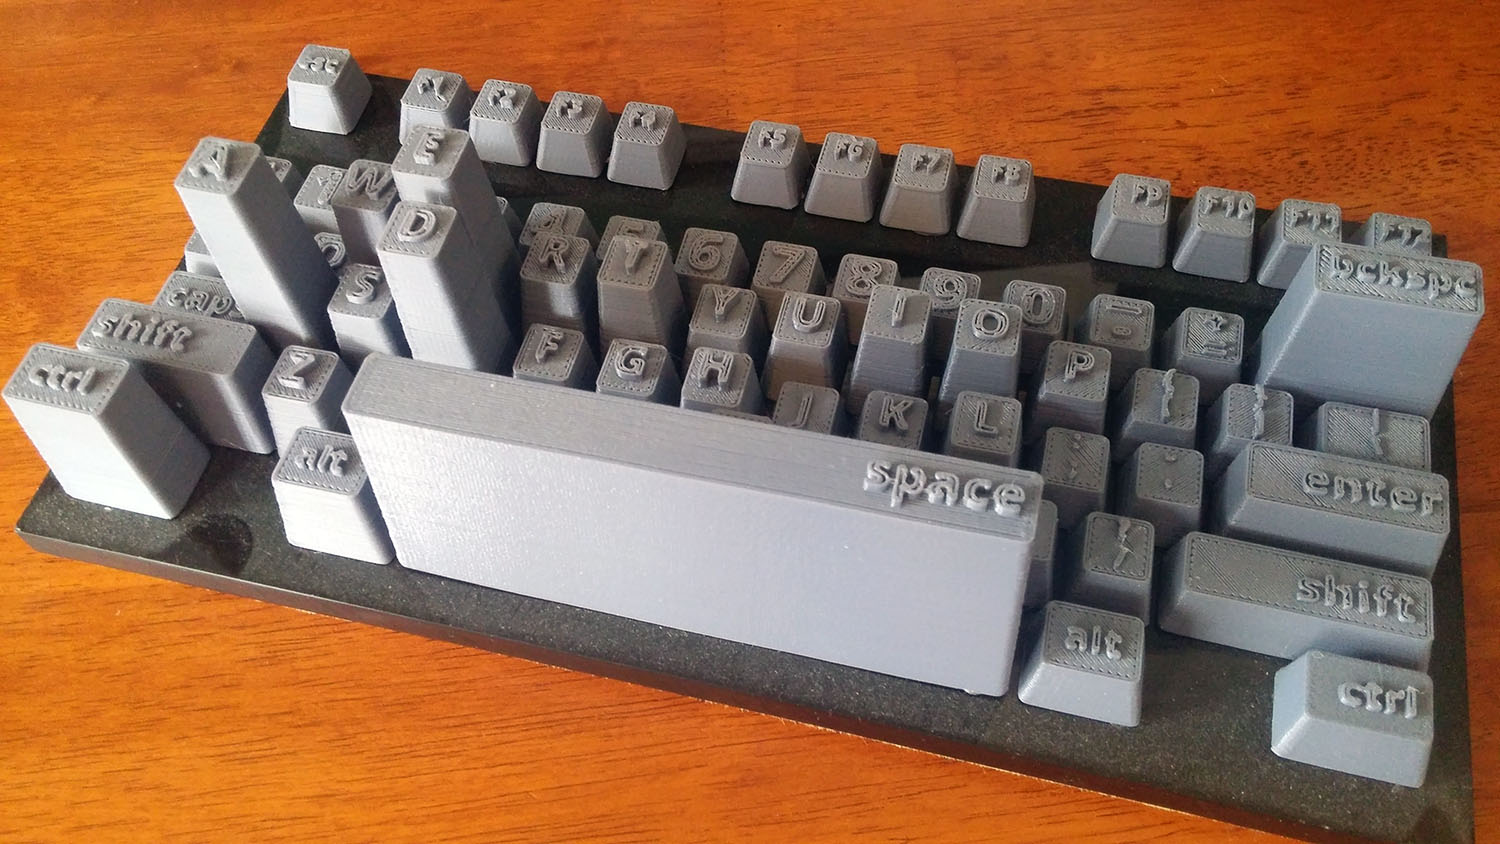 3d printed keyboard blake hayward